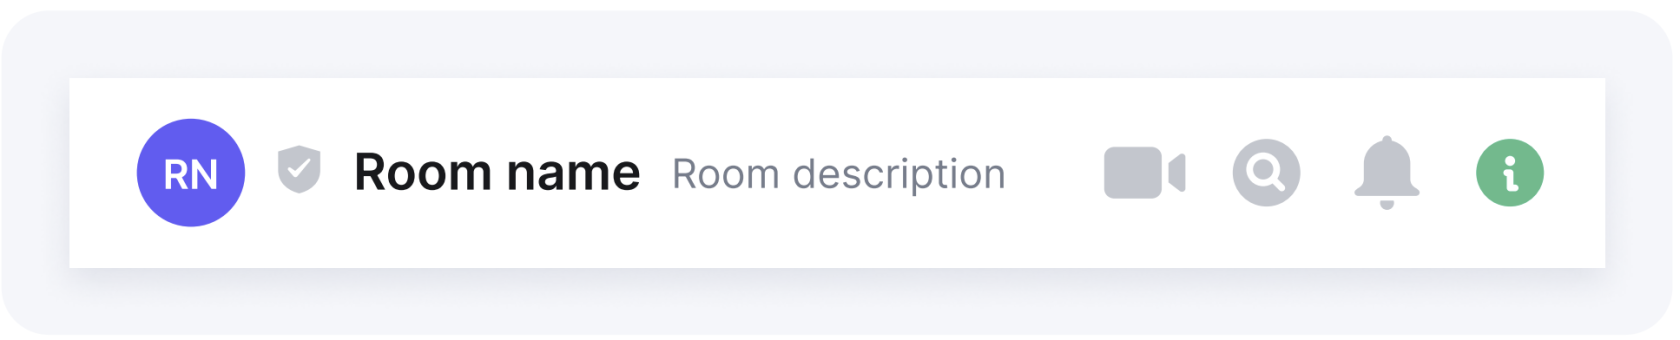 room_information